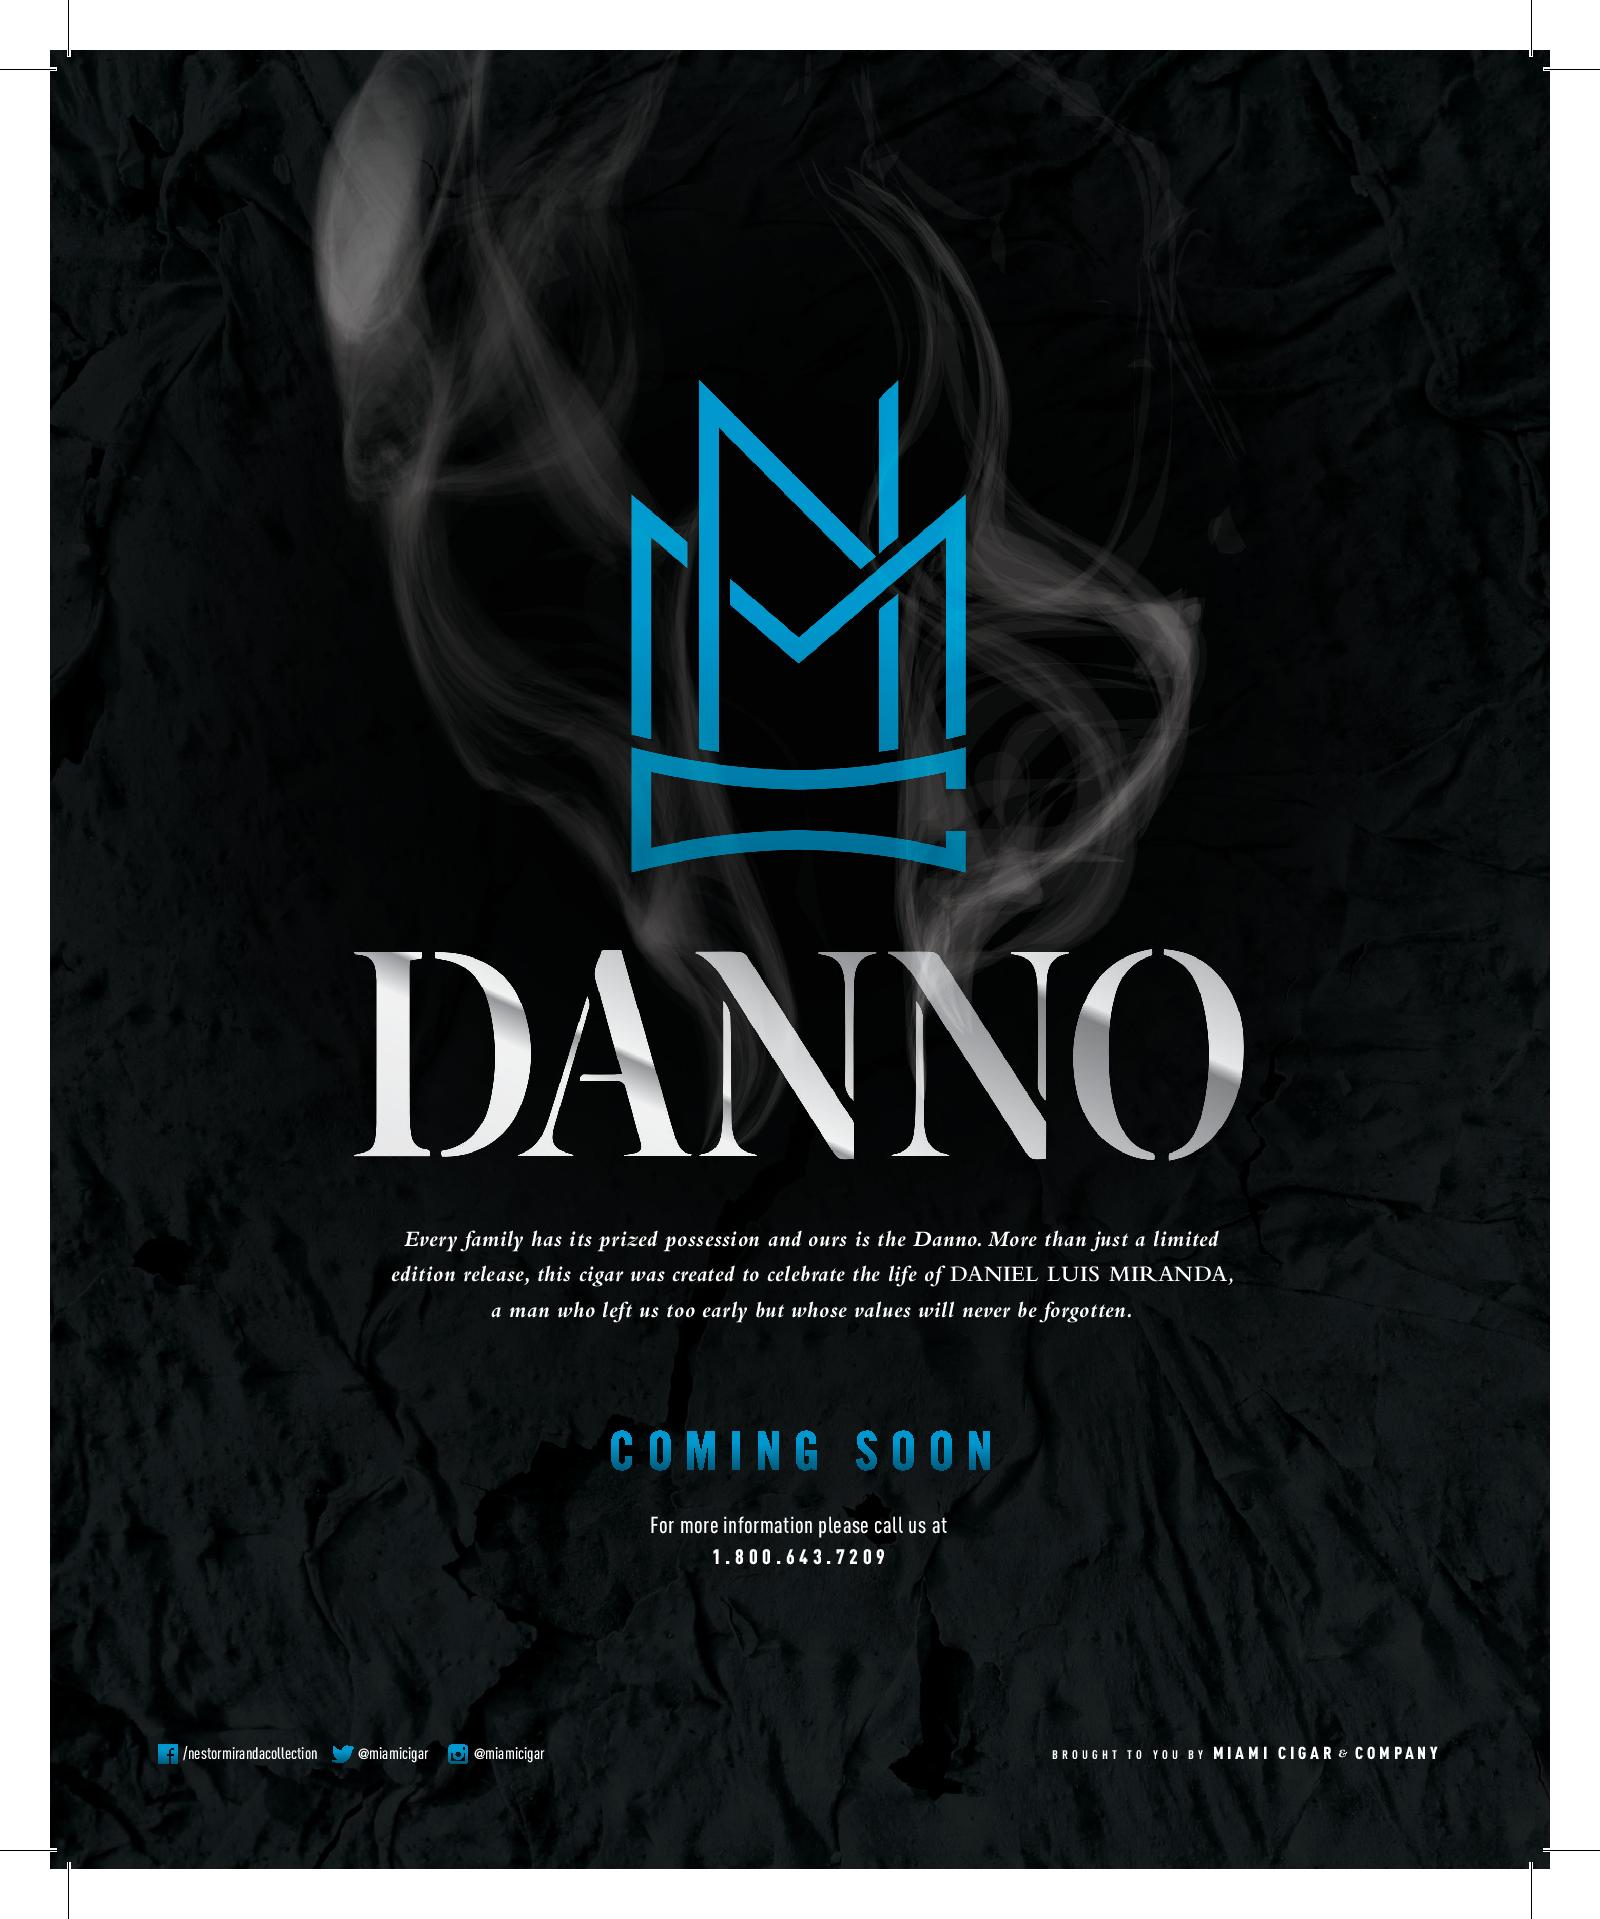 Cigar News: Miami Cigar & Co. Unveils Nestor Miranda Collection "Danno"